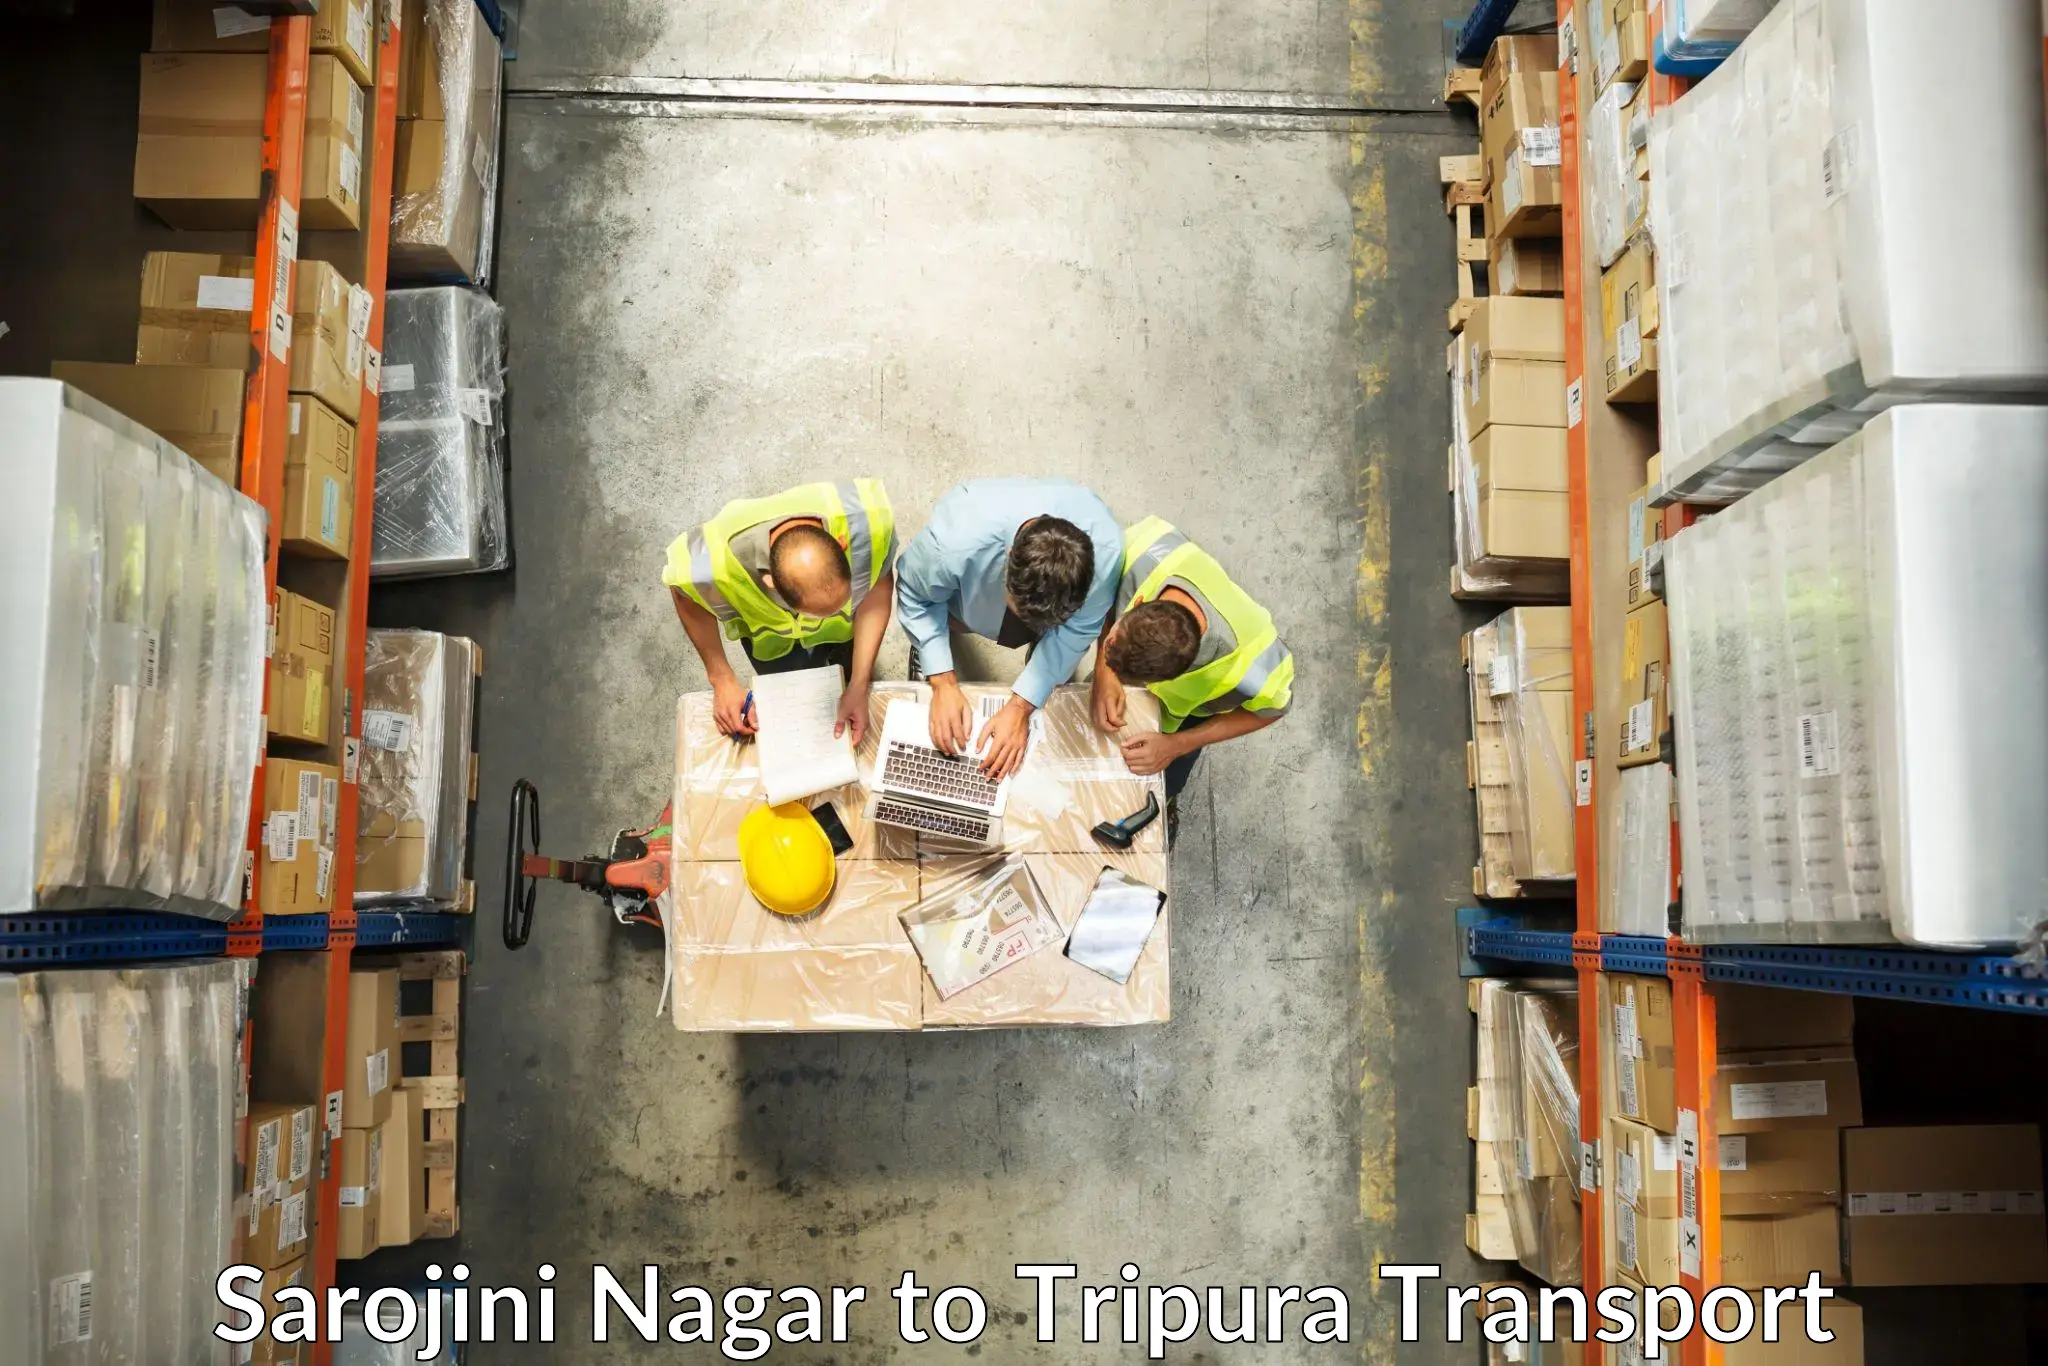 Truck transport companies in India Sarojini Nagar to Udaipur Tripura